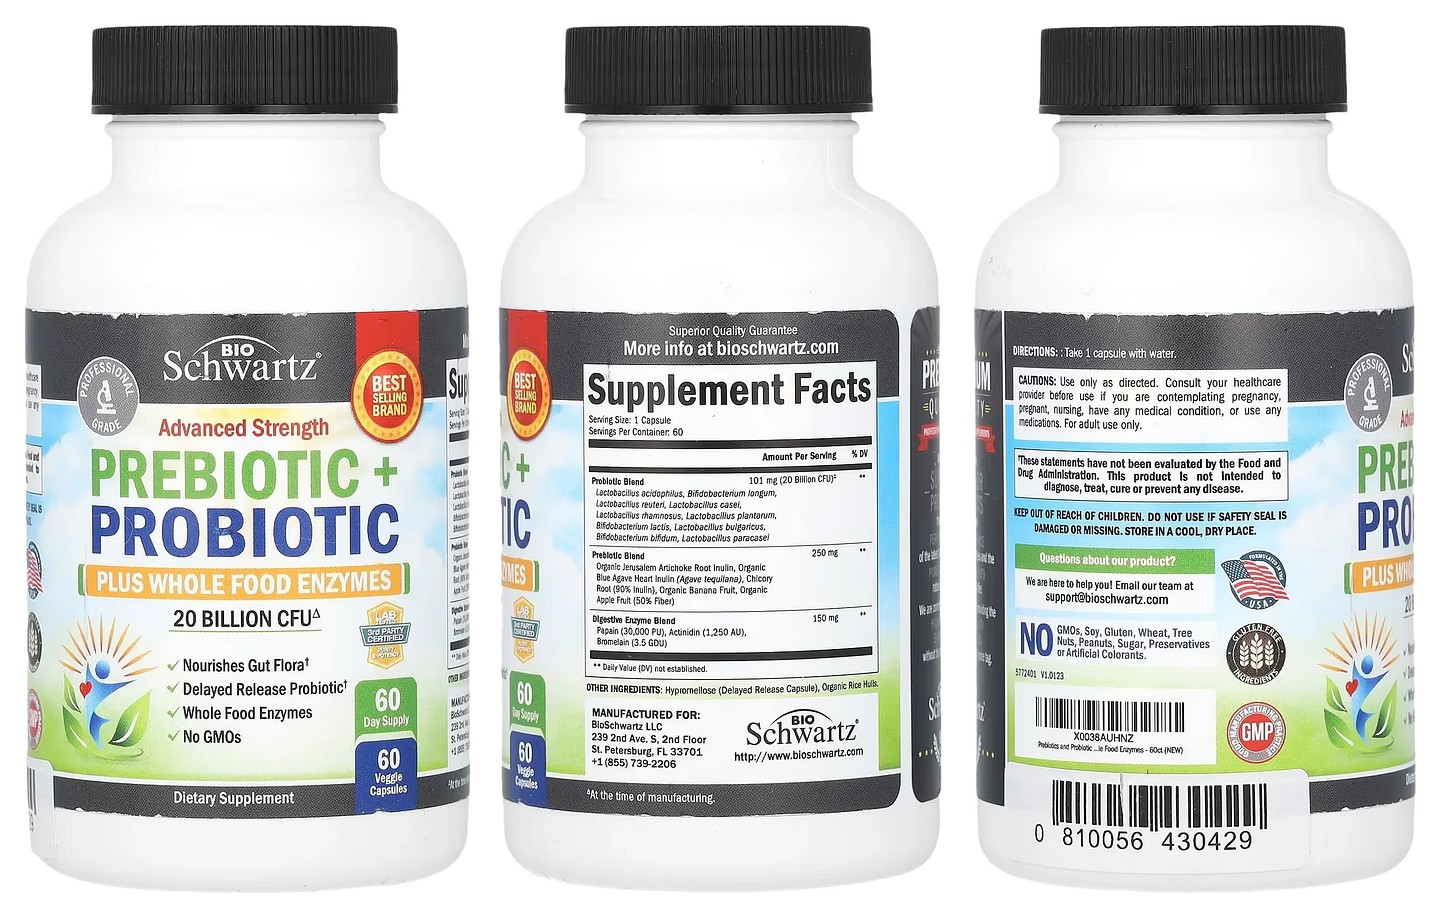 BioSchwartz, Advanced Strength Prebiotic + Probiotic Plus Whole Food Enzymes packaging